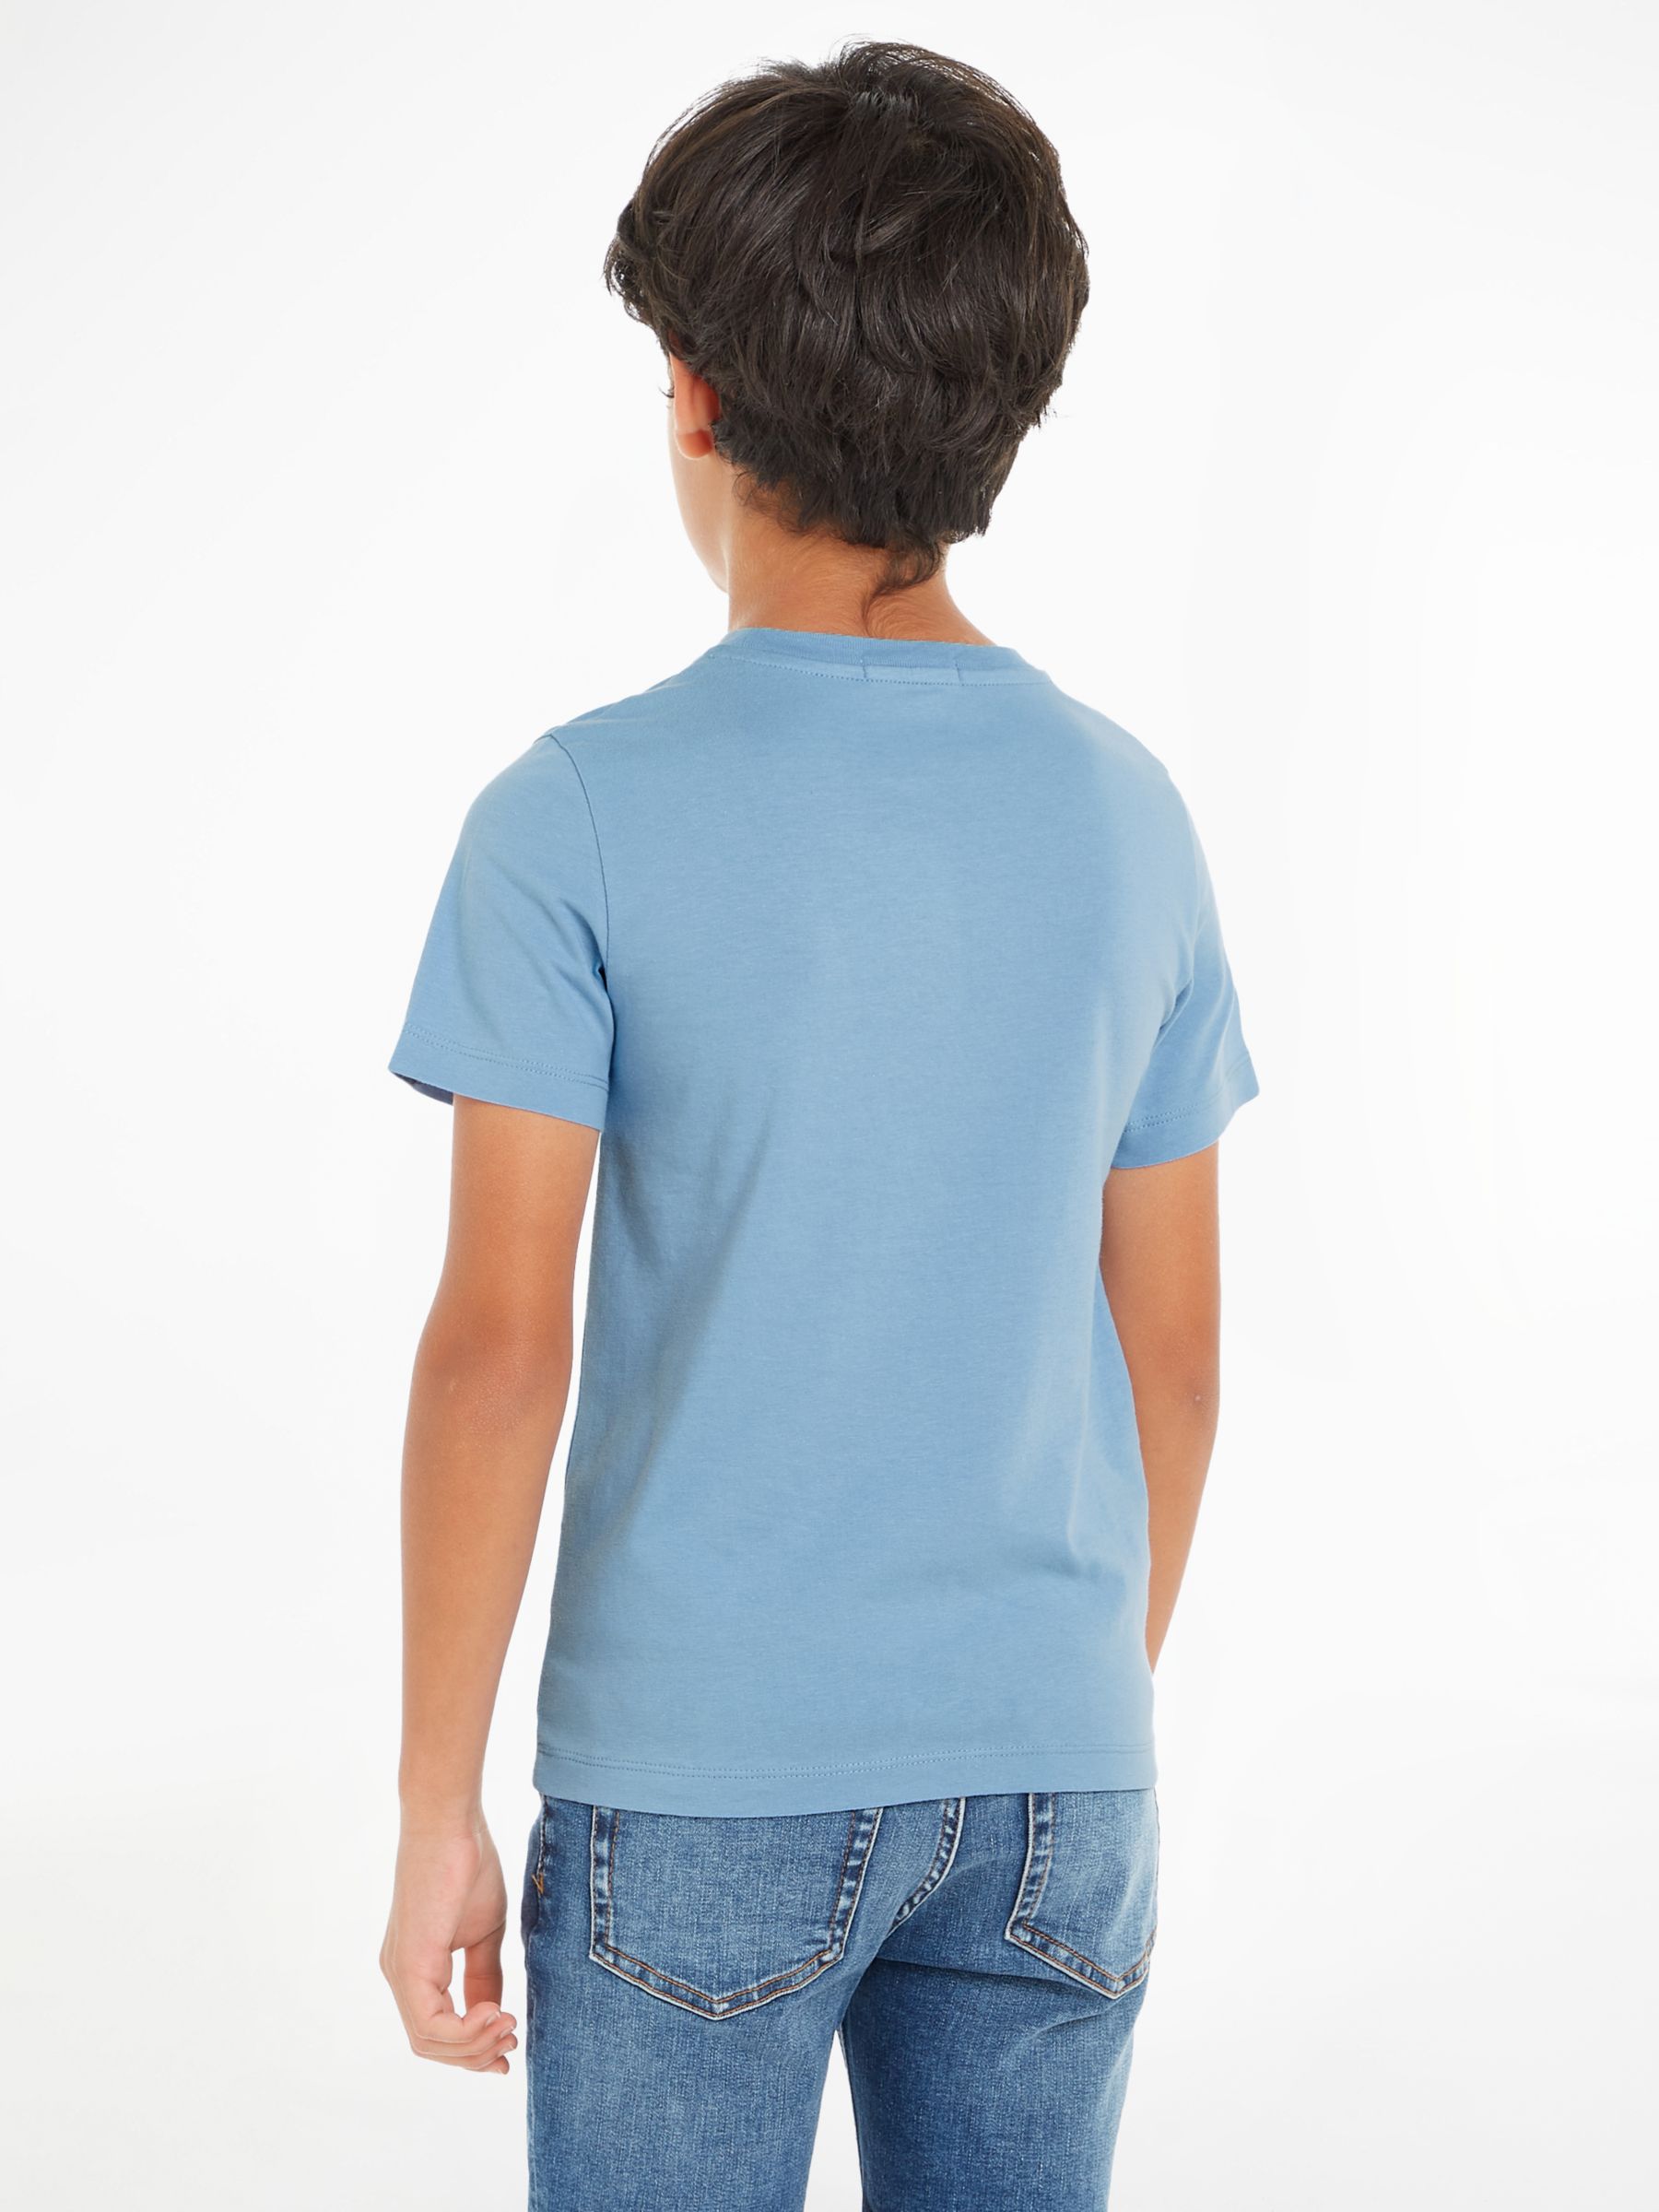 Buy Calvin Klein Kids' Short Sleeve Logo T-Shirt, Dusk Blue Online at johnlewis.com